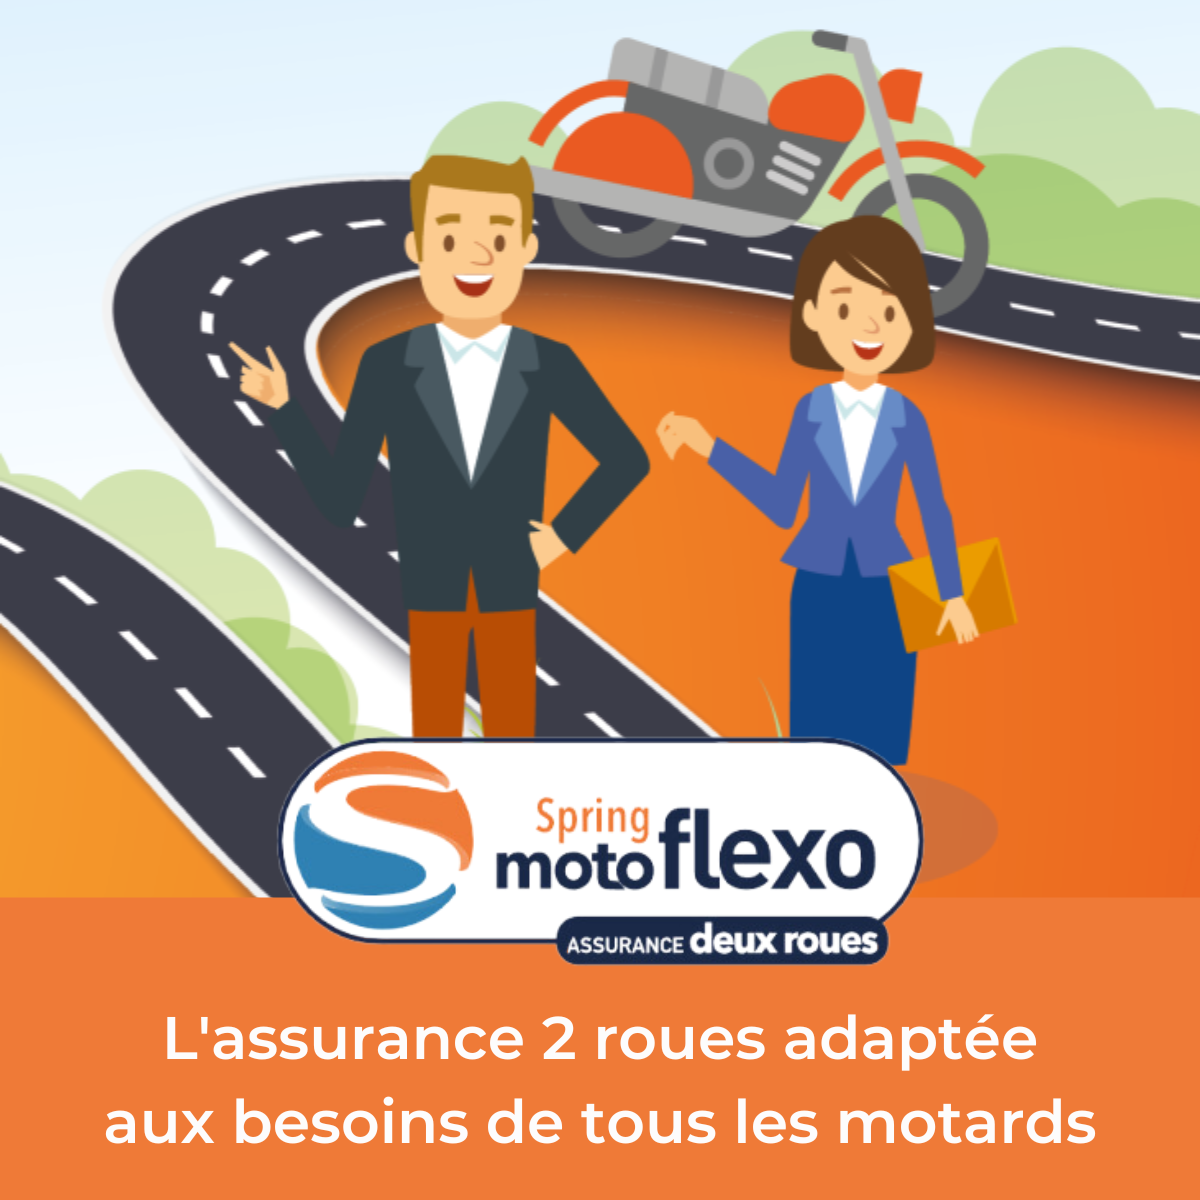 Spring Motoflexo - courtier grossiste assurance 2 roues